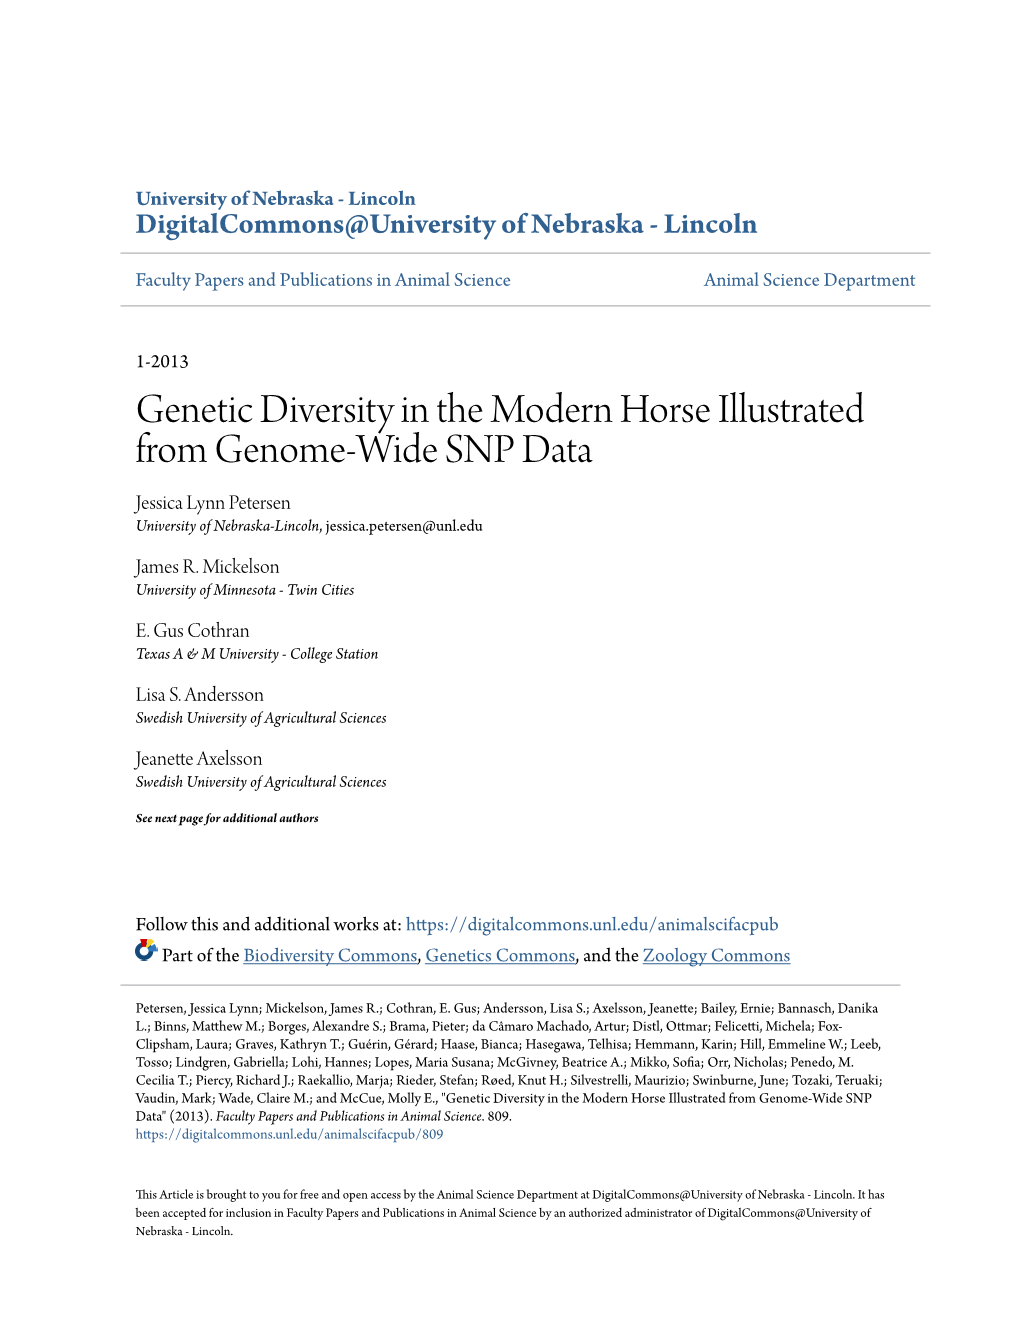 Genetic Diversity in the Modern Horse Illustrated from Genome-Wide SNP Data Jessica Lynn Petersen University of Nebraska-Lincoln, Jessica.Petersen@Unl.Edu